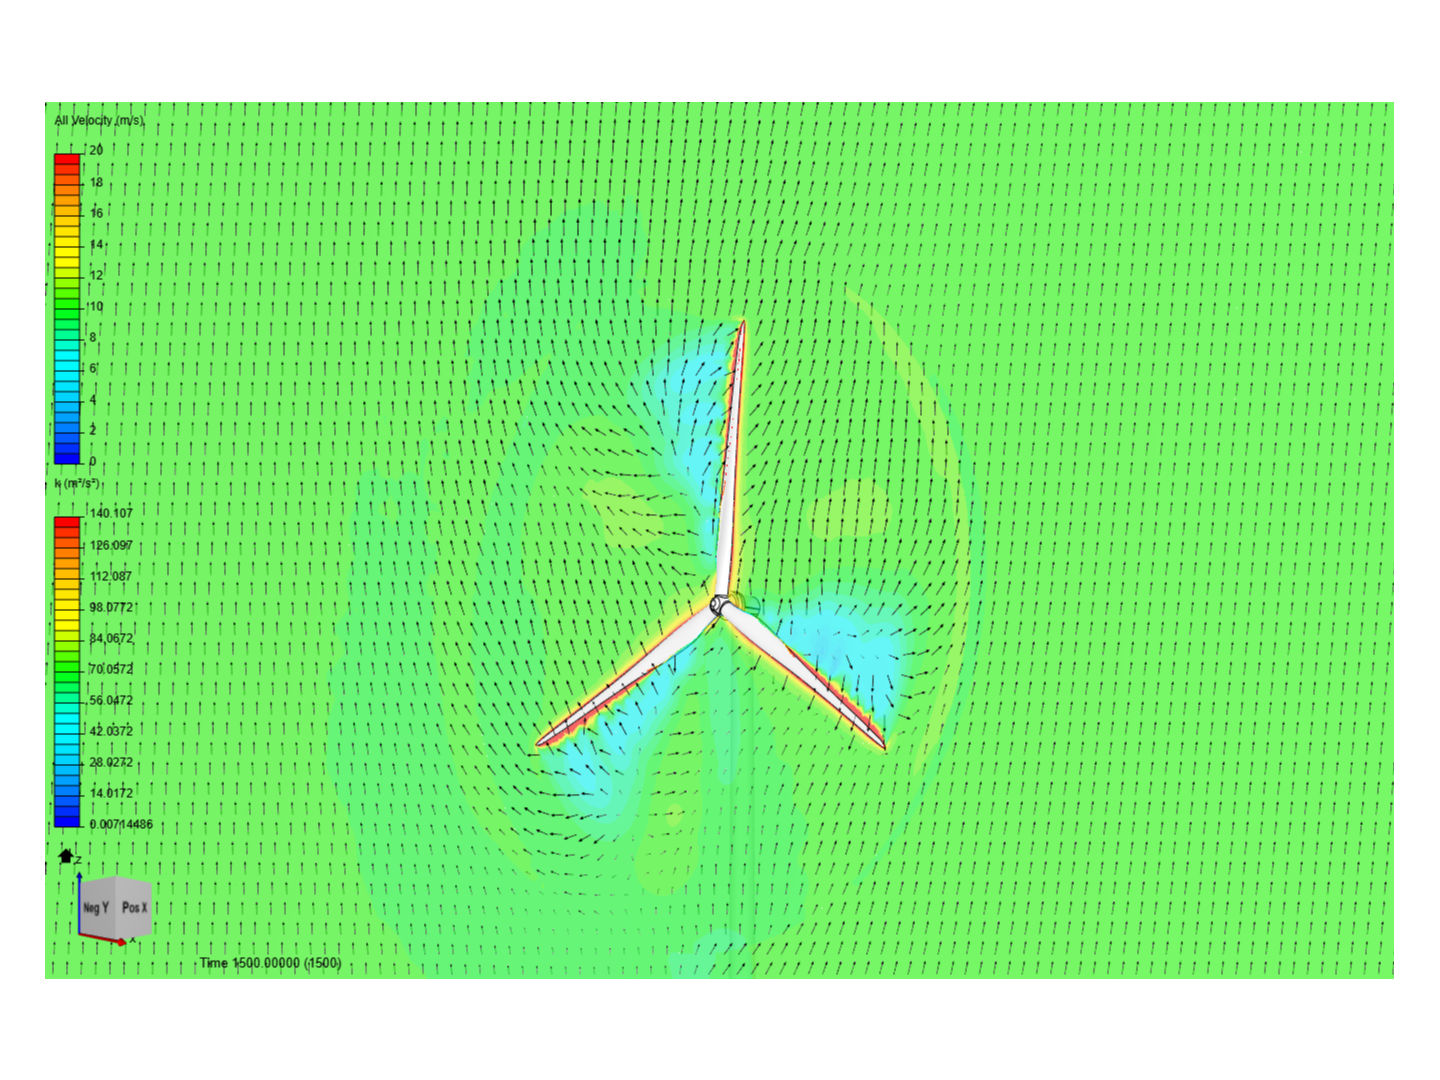 Wind Turbine Simulation of Airflow around the Blades image